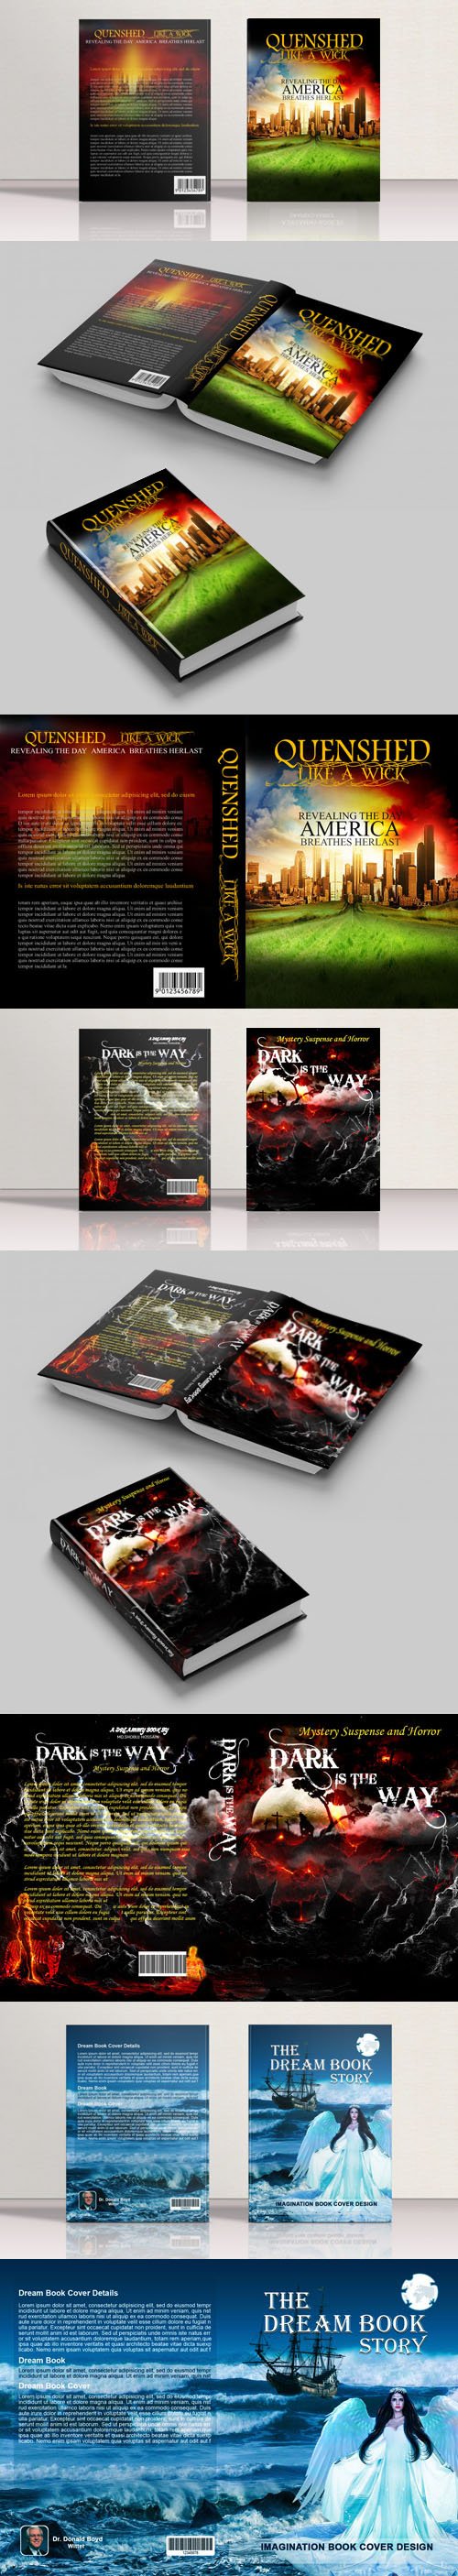 Suspense Historical & Story Book Cover Design PSD Templates